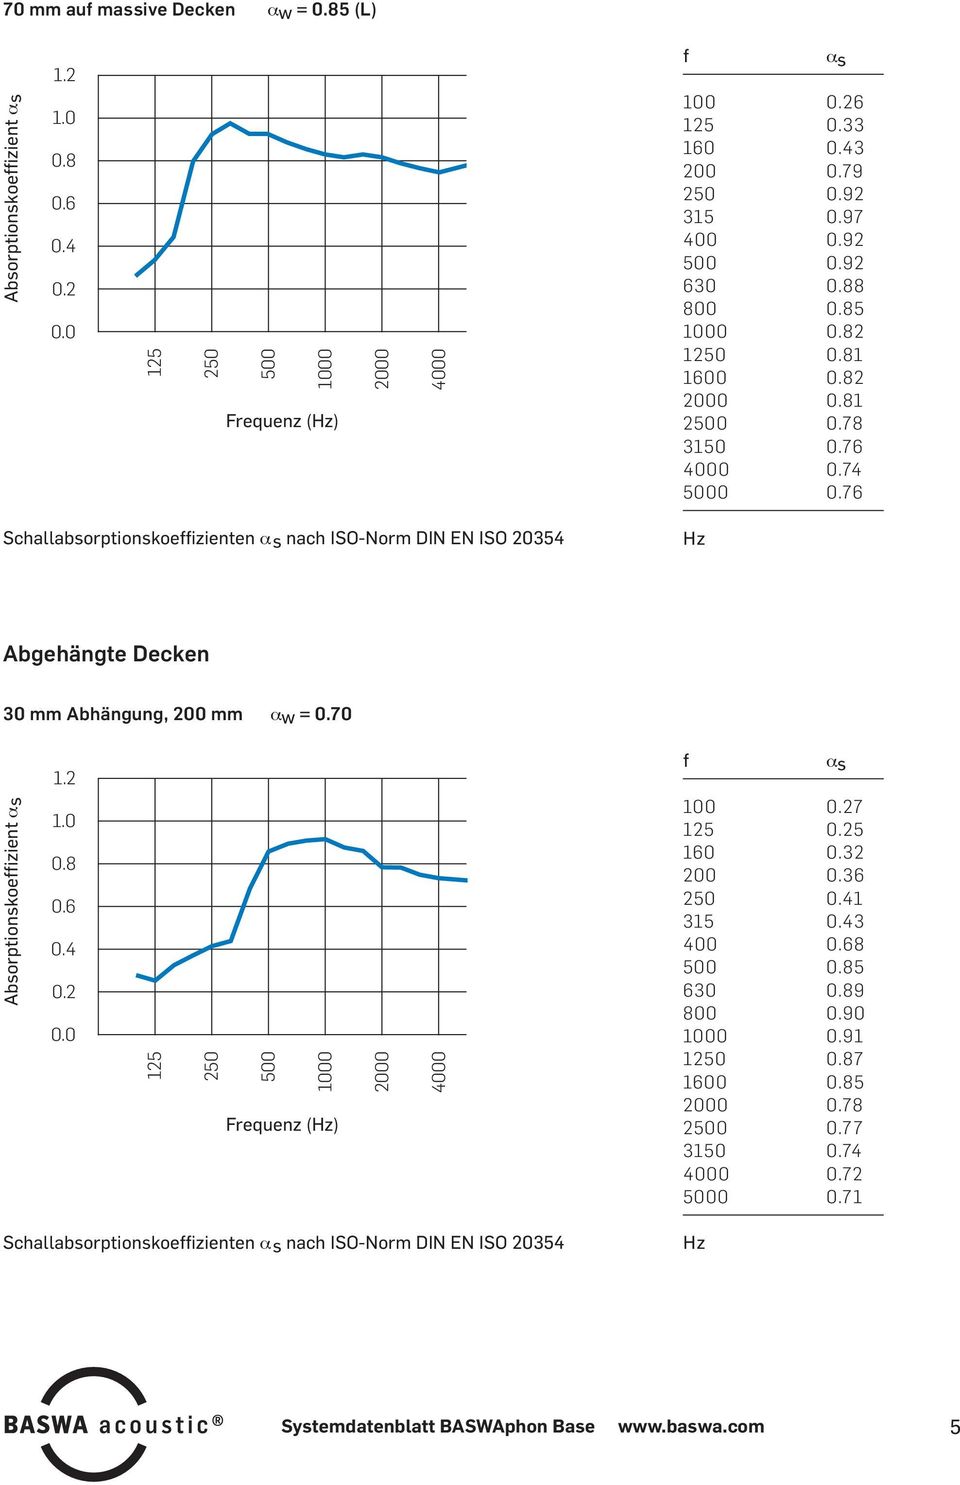 76 Schallabsorptionskoeizienten nach ISO-Norm DIN EN ISO 20354 Abgehängte Decken 30 mm Abhängung, 200 mm aw = 0.